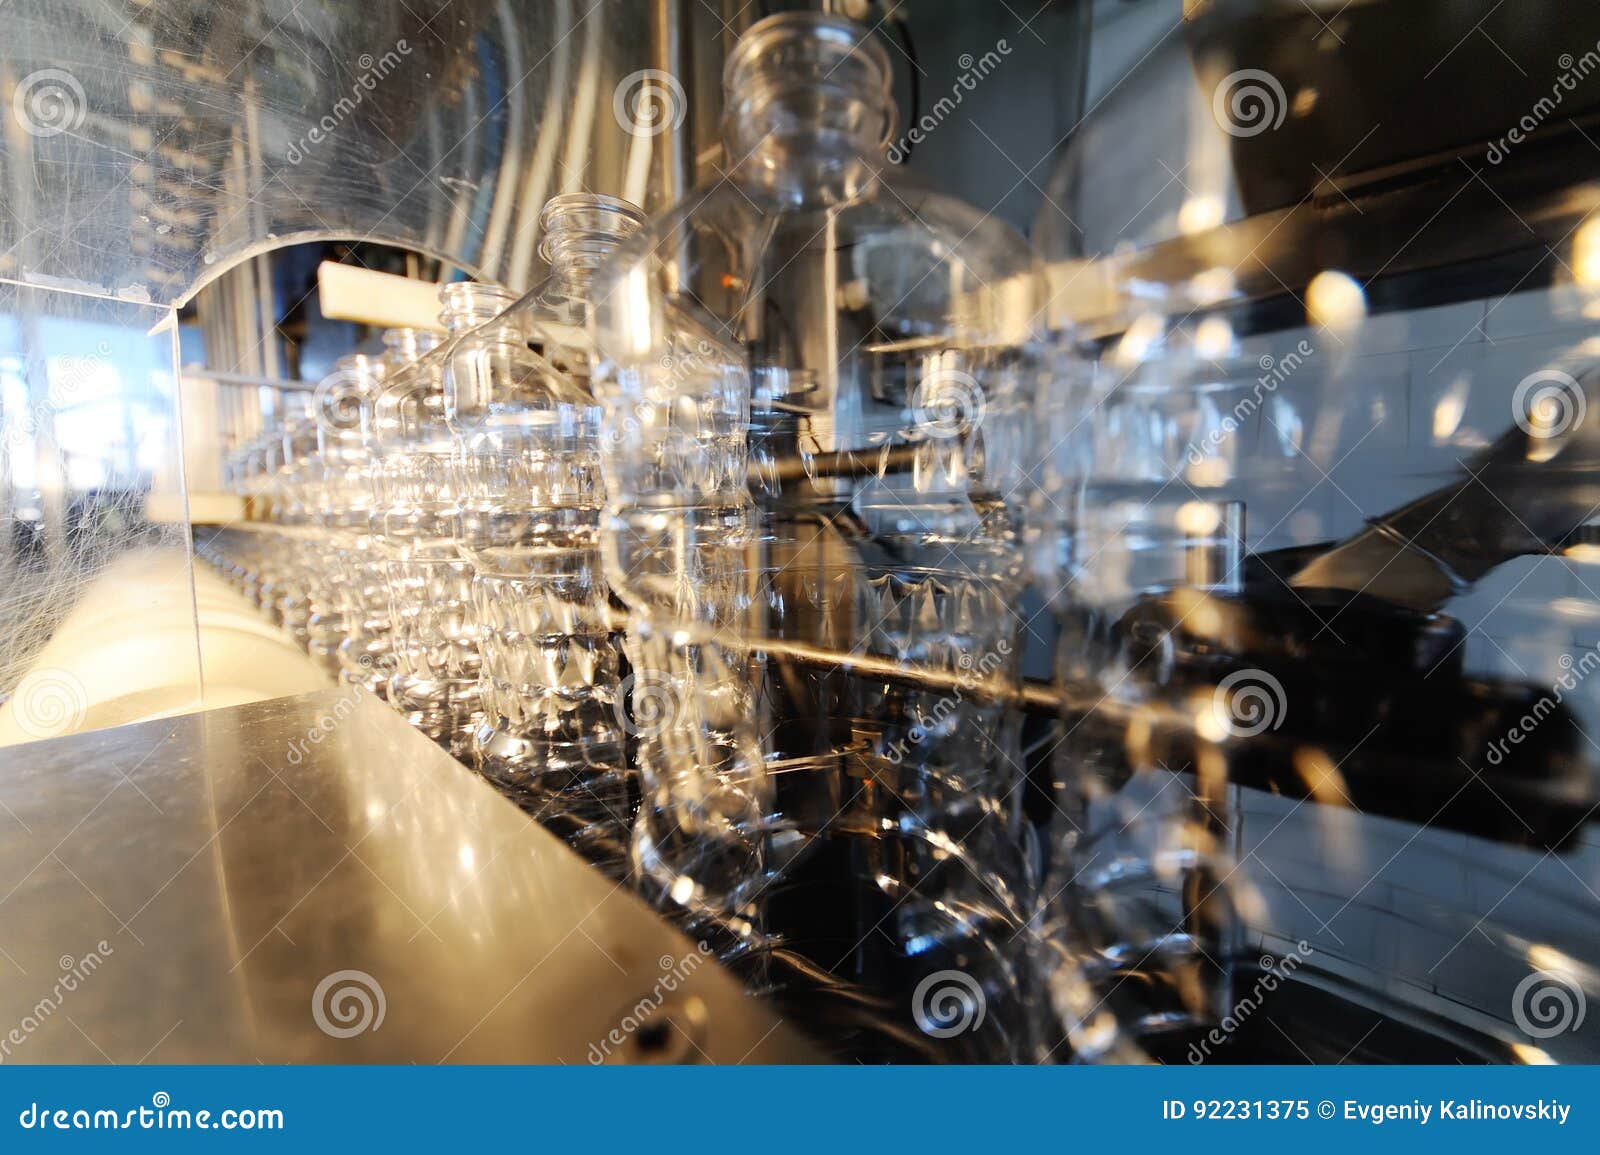 Production of PET Bottles. Many Plastic Bottles Close-up Stock Image ...